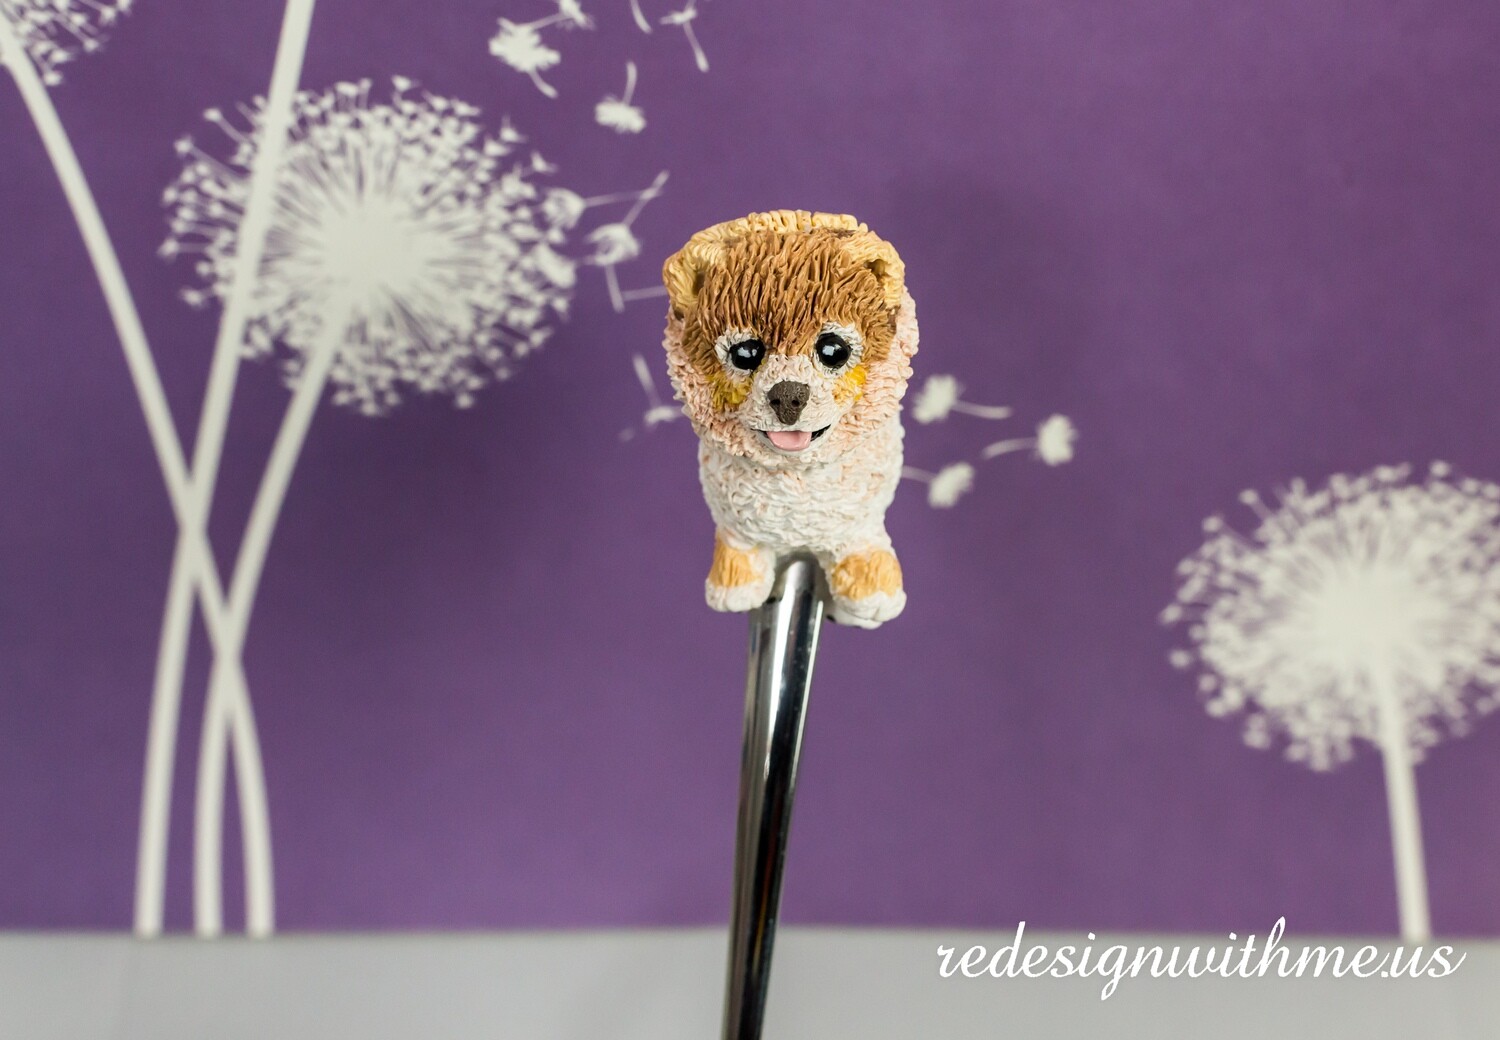 Celebrity Dog Portrait spoon - Boo the Pomeranian stirring spoon - gone but not forgotten